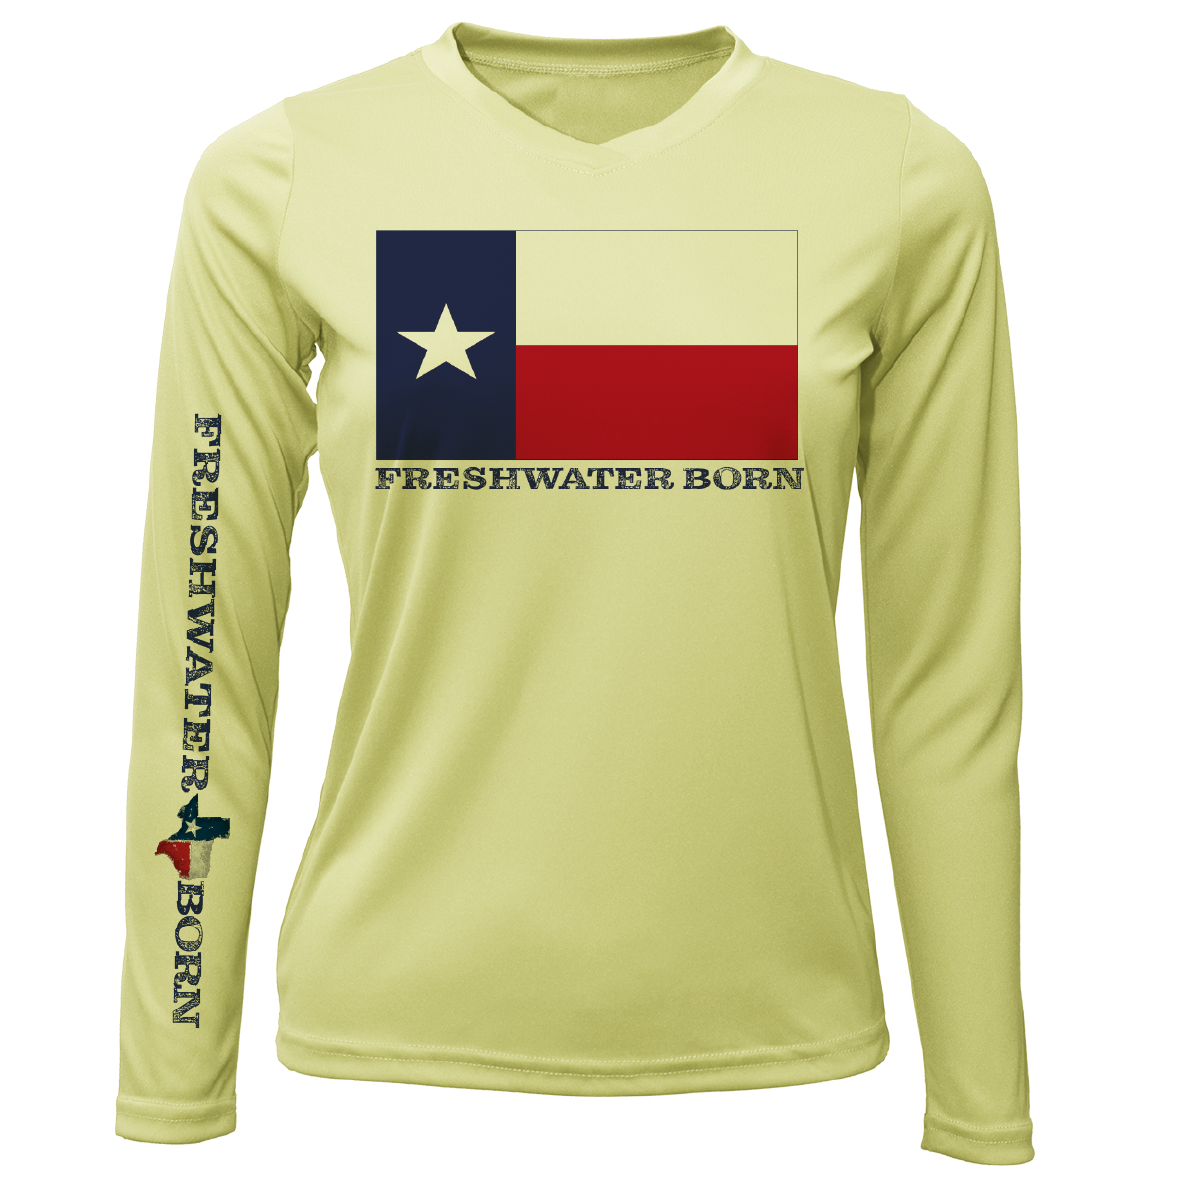 Camisa de manga larga con protección seca UPF 50+ para mujer con bandera de Texas Freshwater Born